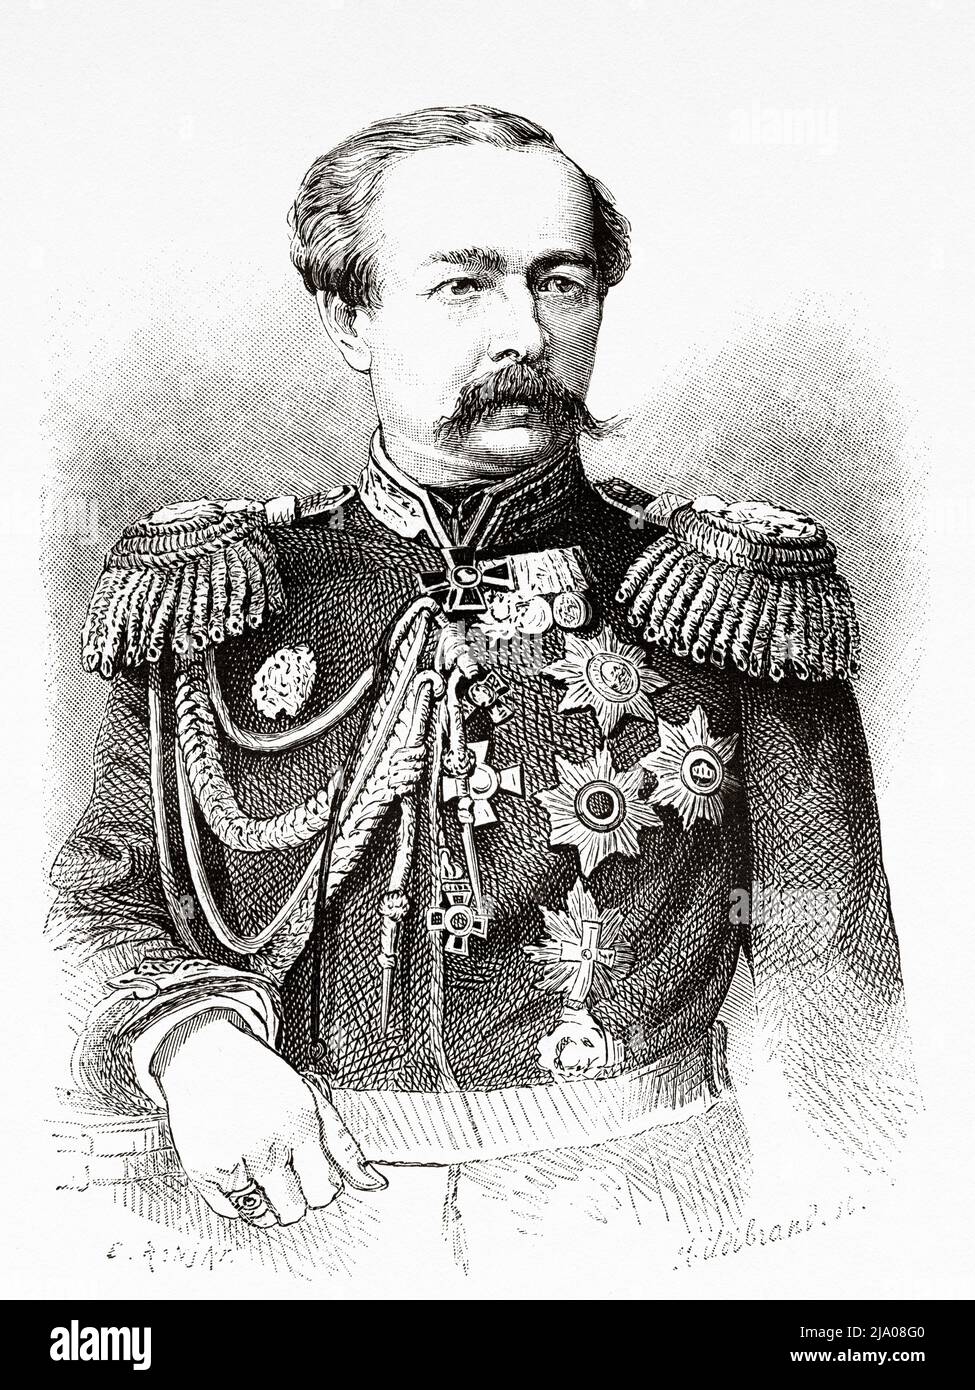 Nikolai Gennadievich Kaznakov (1823-1885) General of the Russian Army, Russia. From Orenburg to Samarkand 1876-1878 by Madame Marie Ujfalvy-Bourdon, Le Tour du Monde 1879 Stock Photo